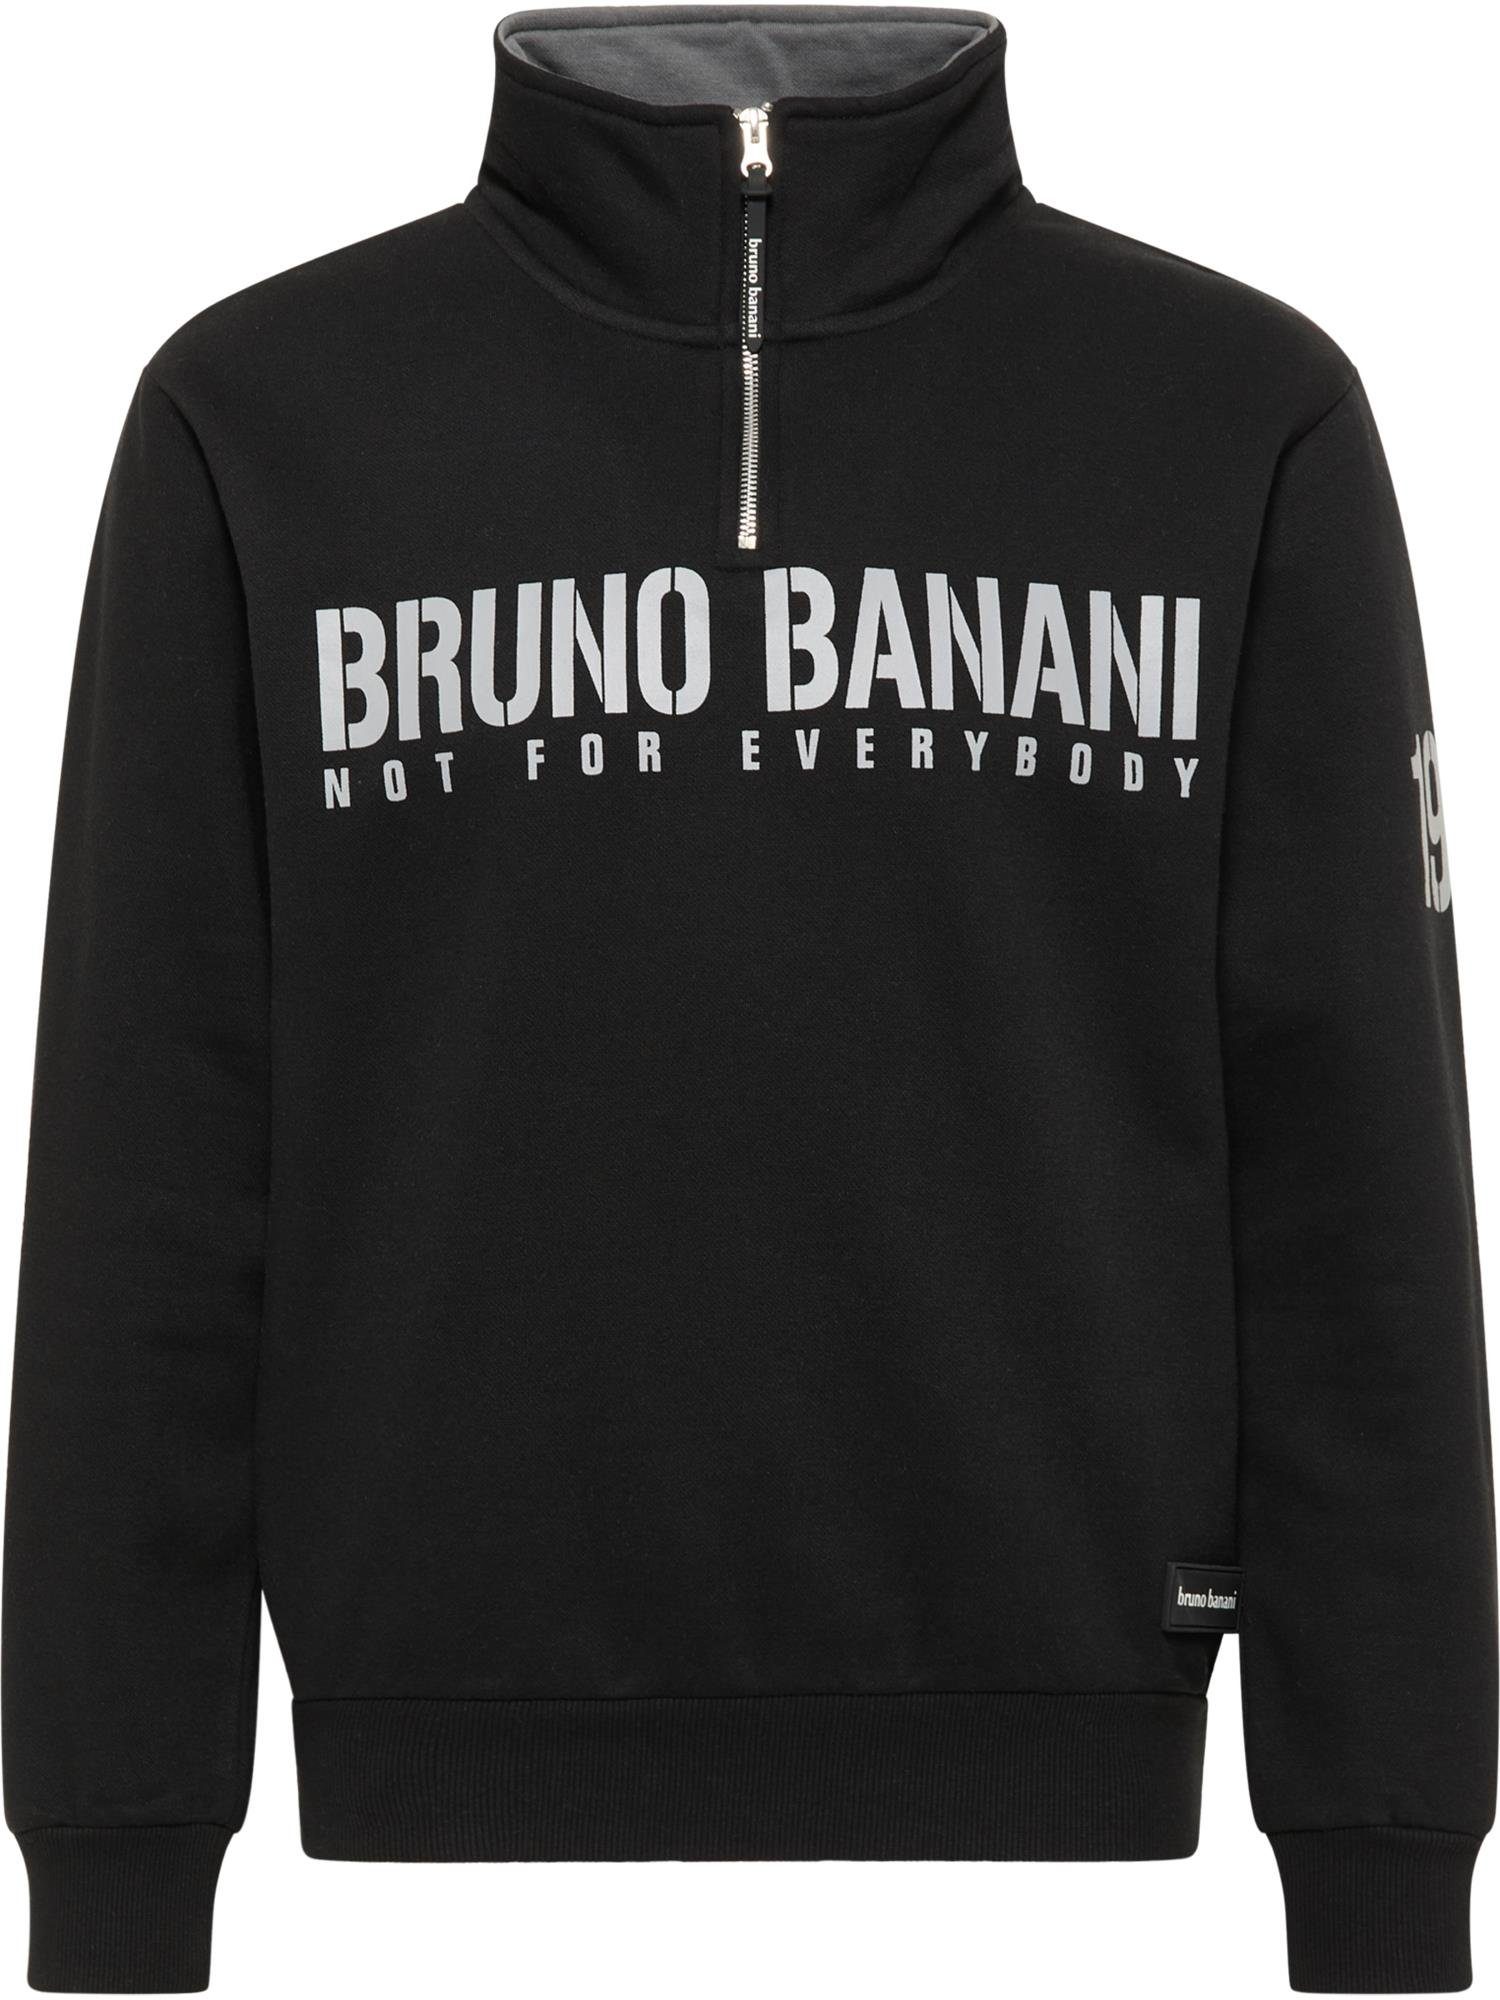 Sweatshirt Banani ANDREWS Bruno